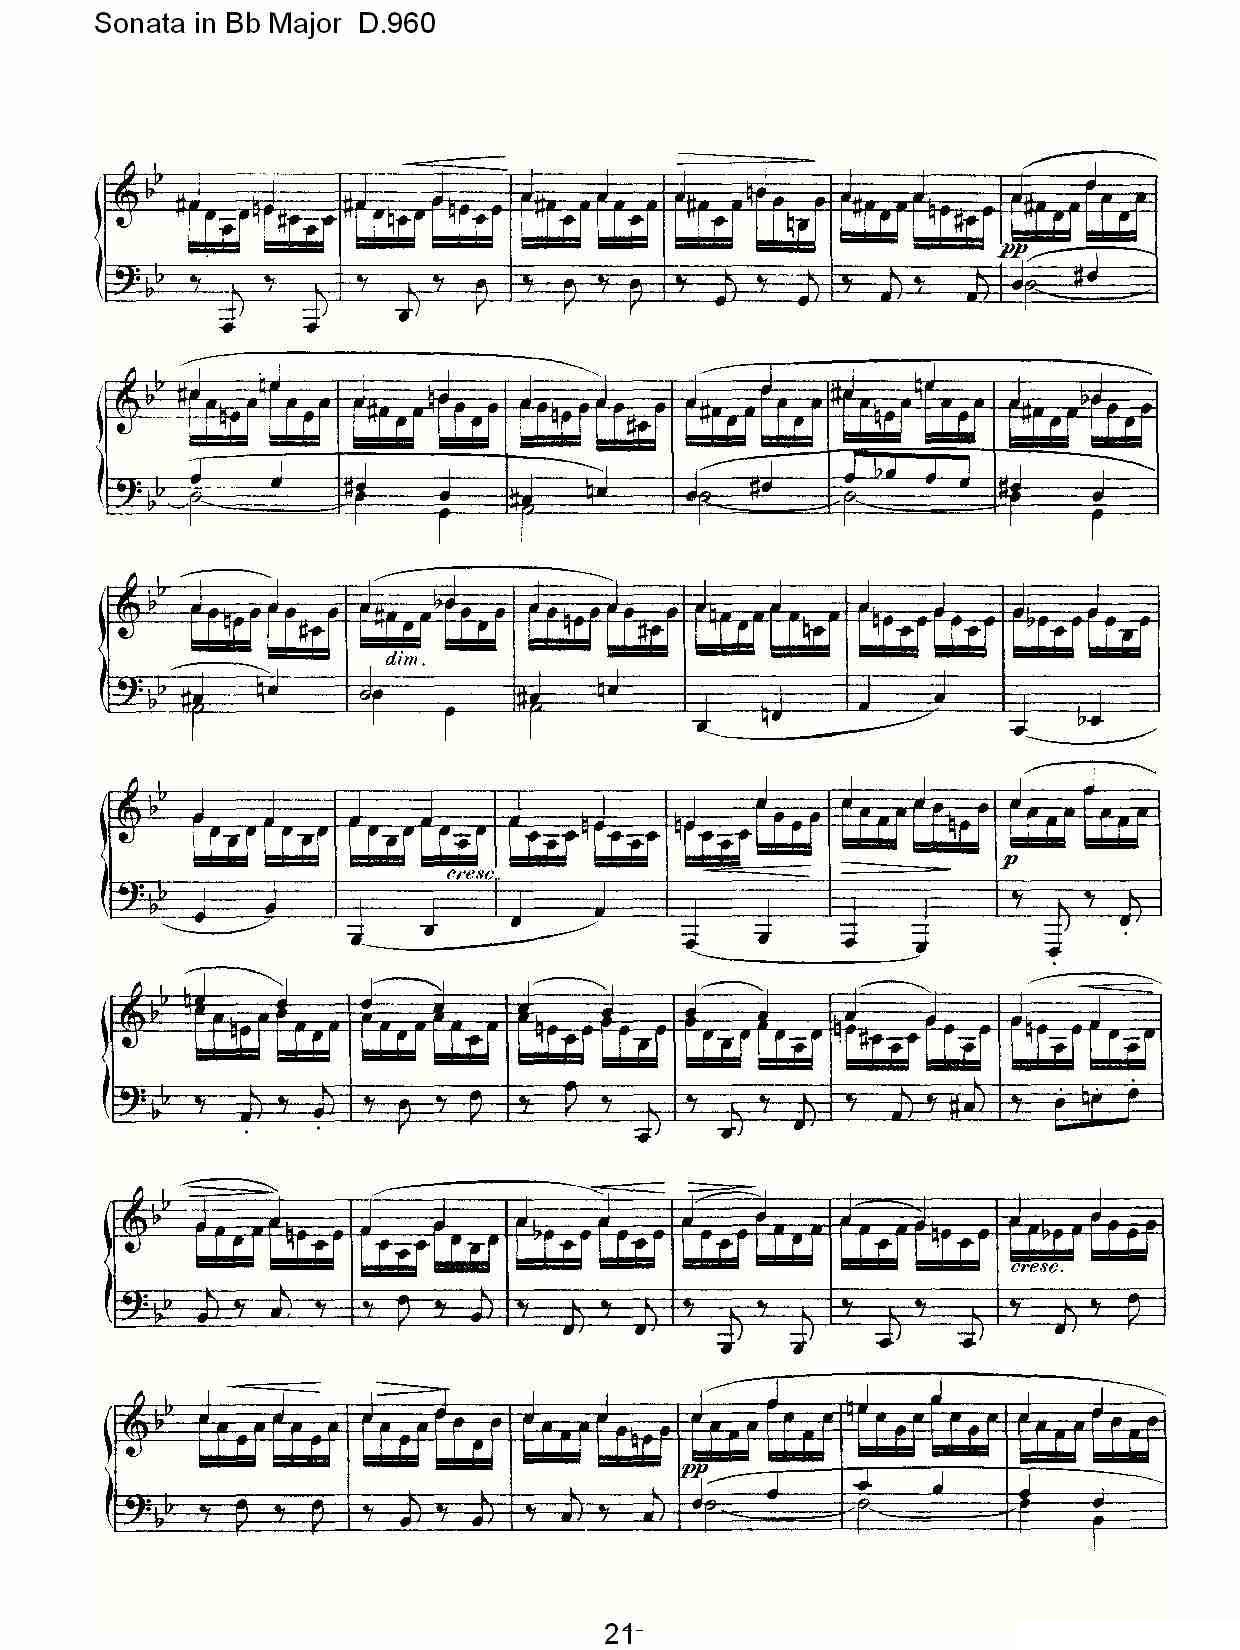 Sonata in Bb Major D.960（Bb大调奏鸣曲 D.960）钢琴曲谱（图21）